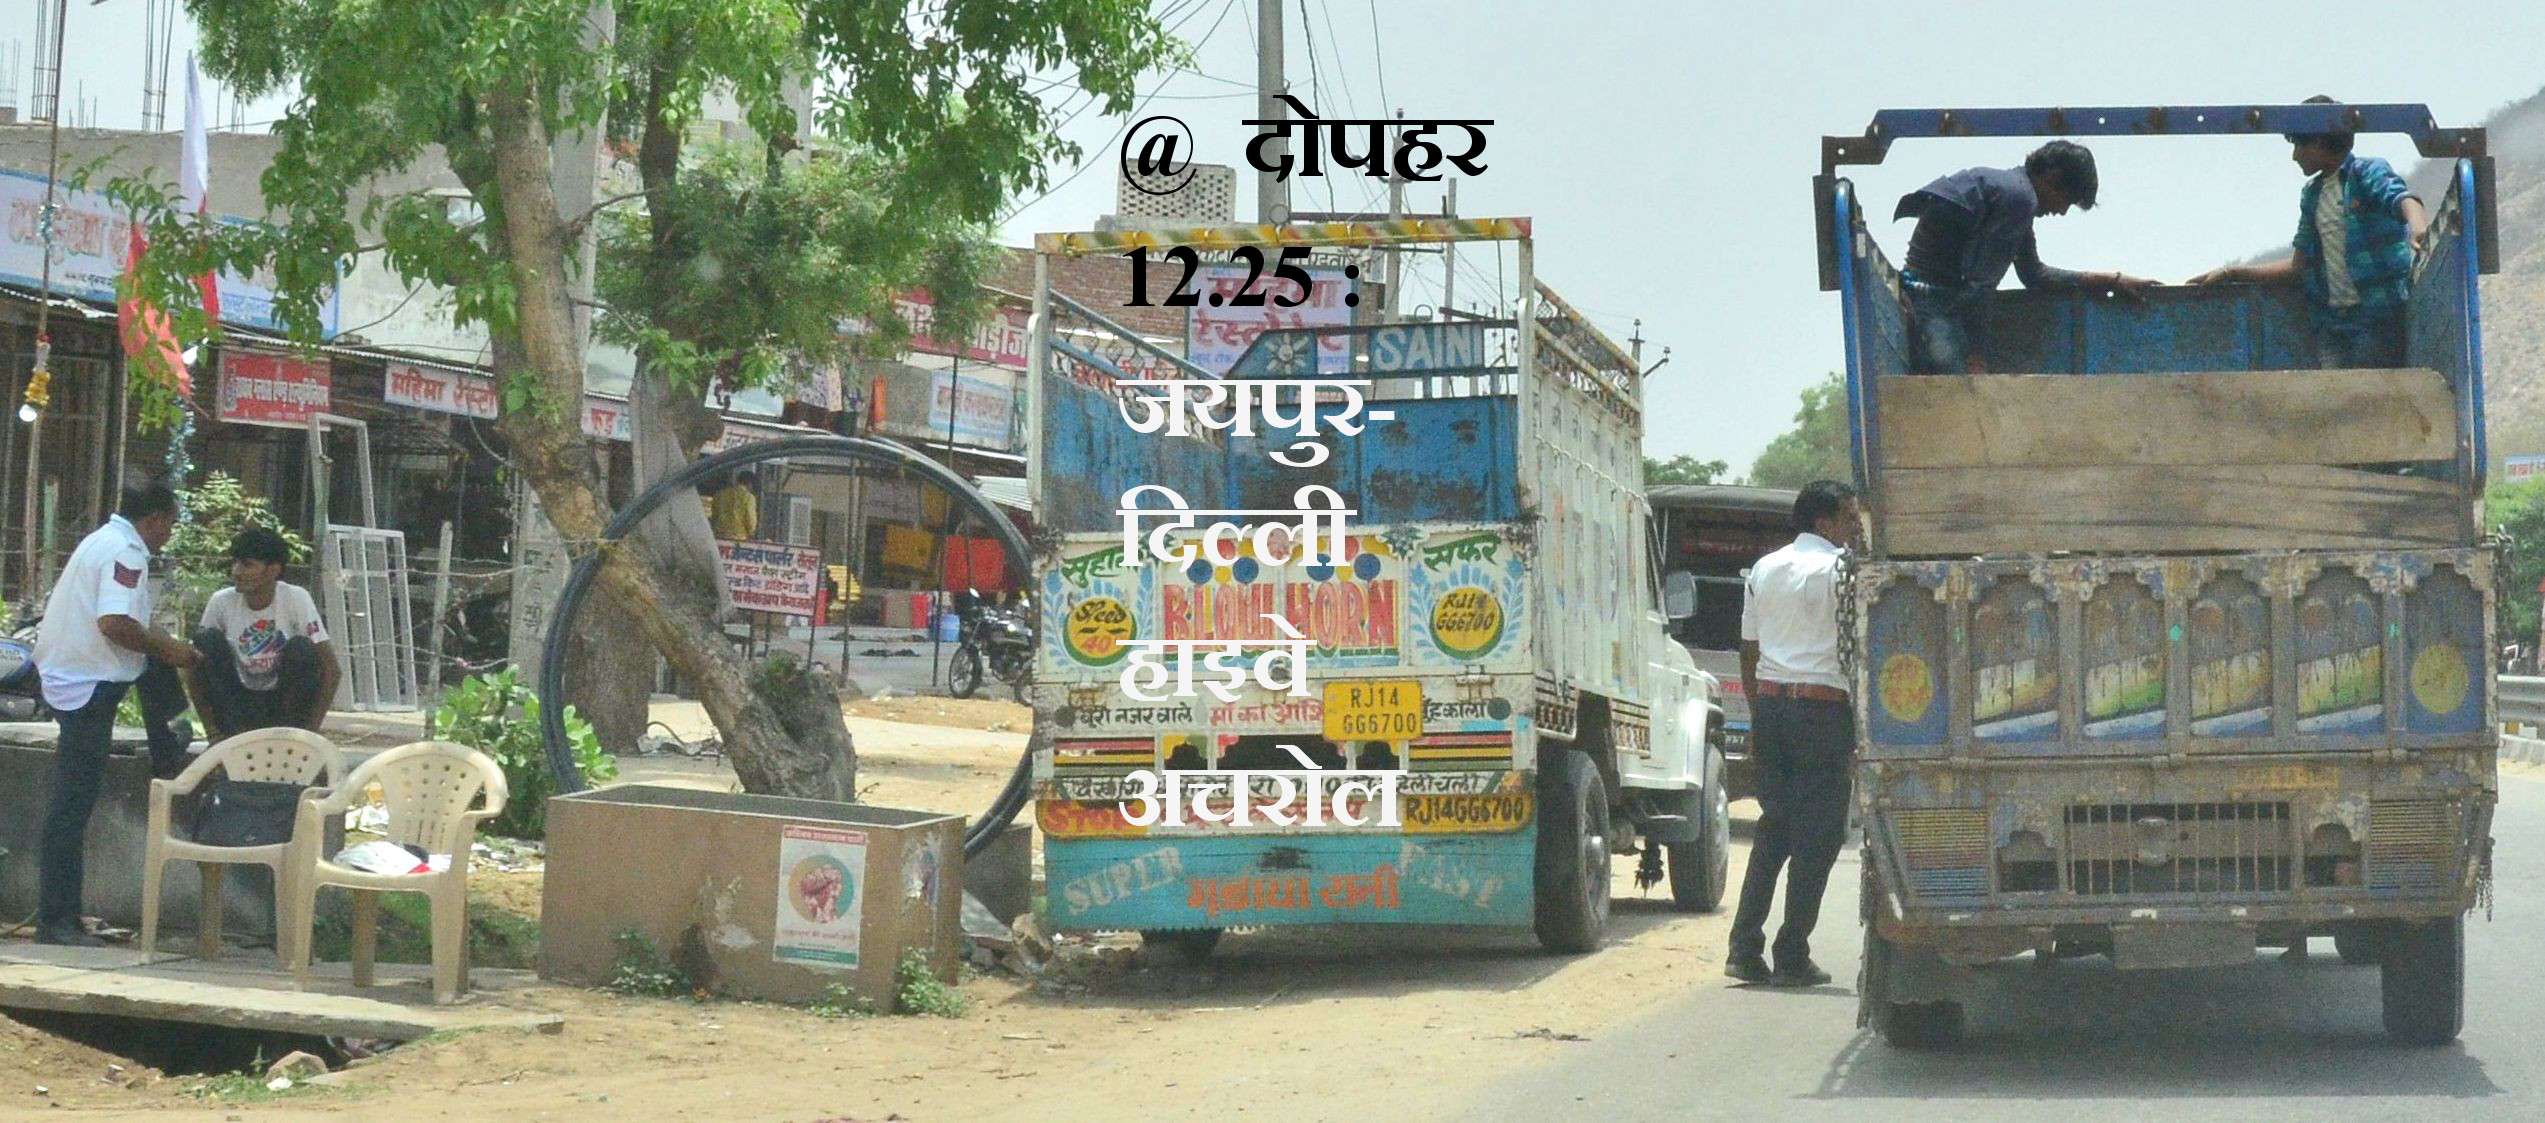 Police sting at the Jaipur-Delhi National Highway of the rajasthan patrika team 